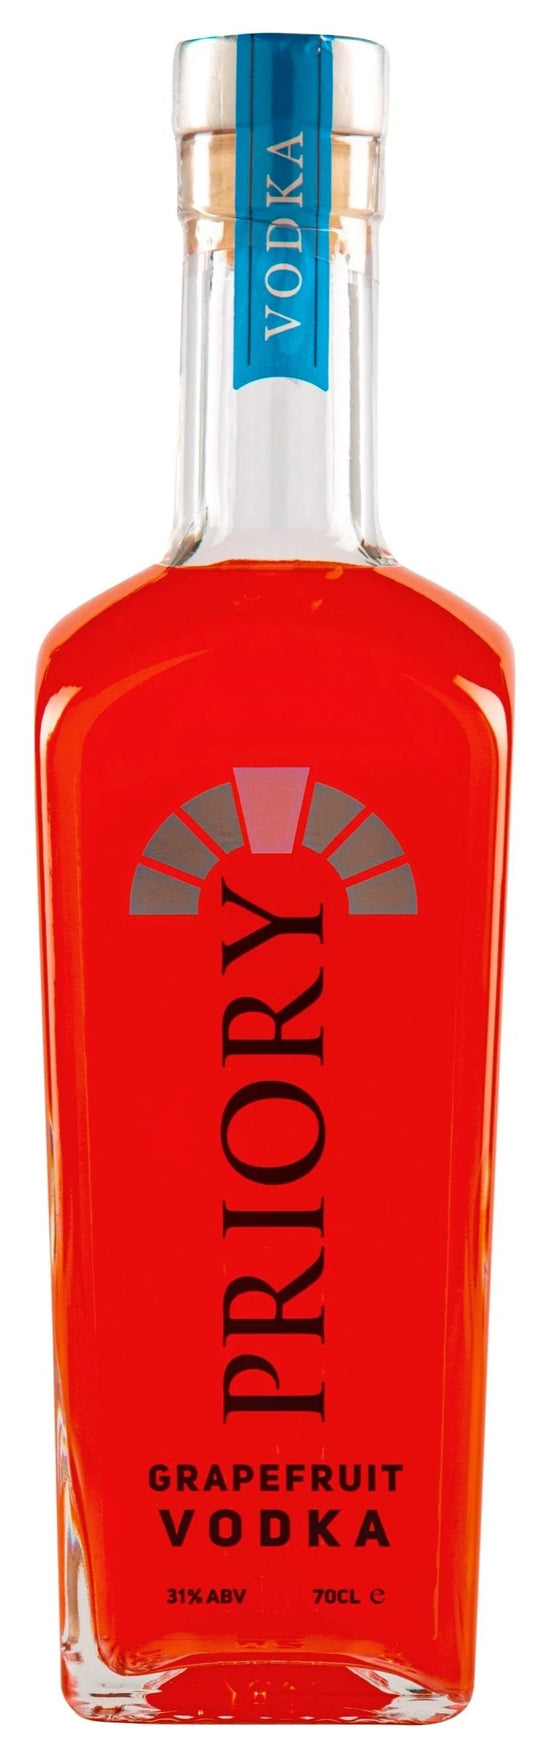 Priory Grapefruit Vodka